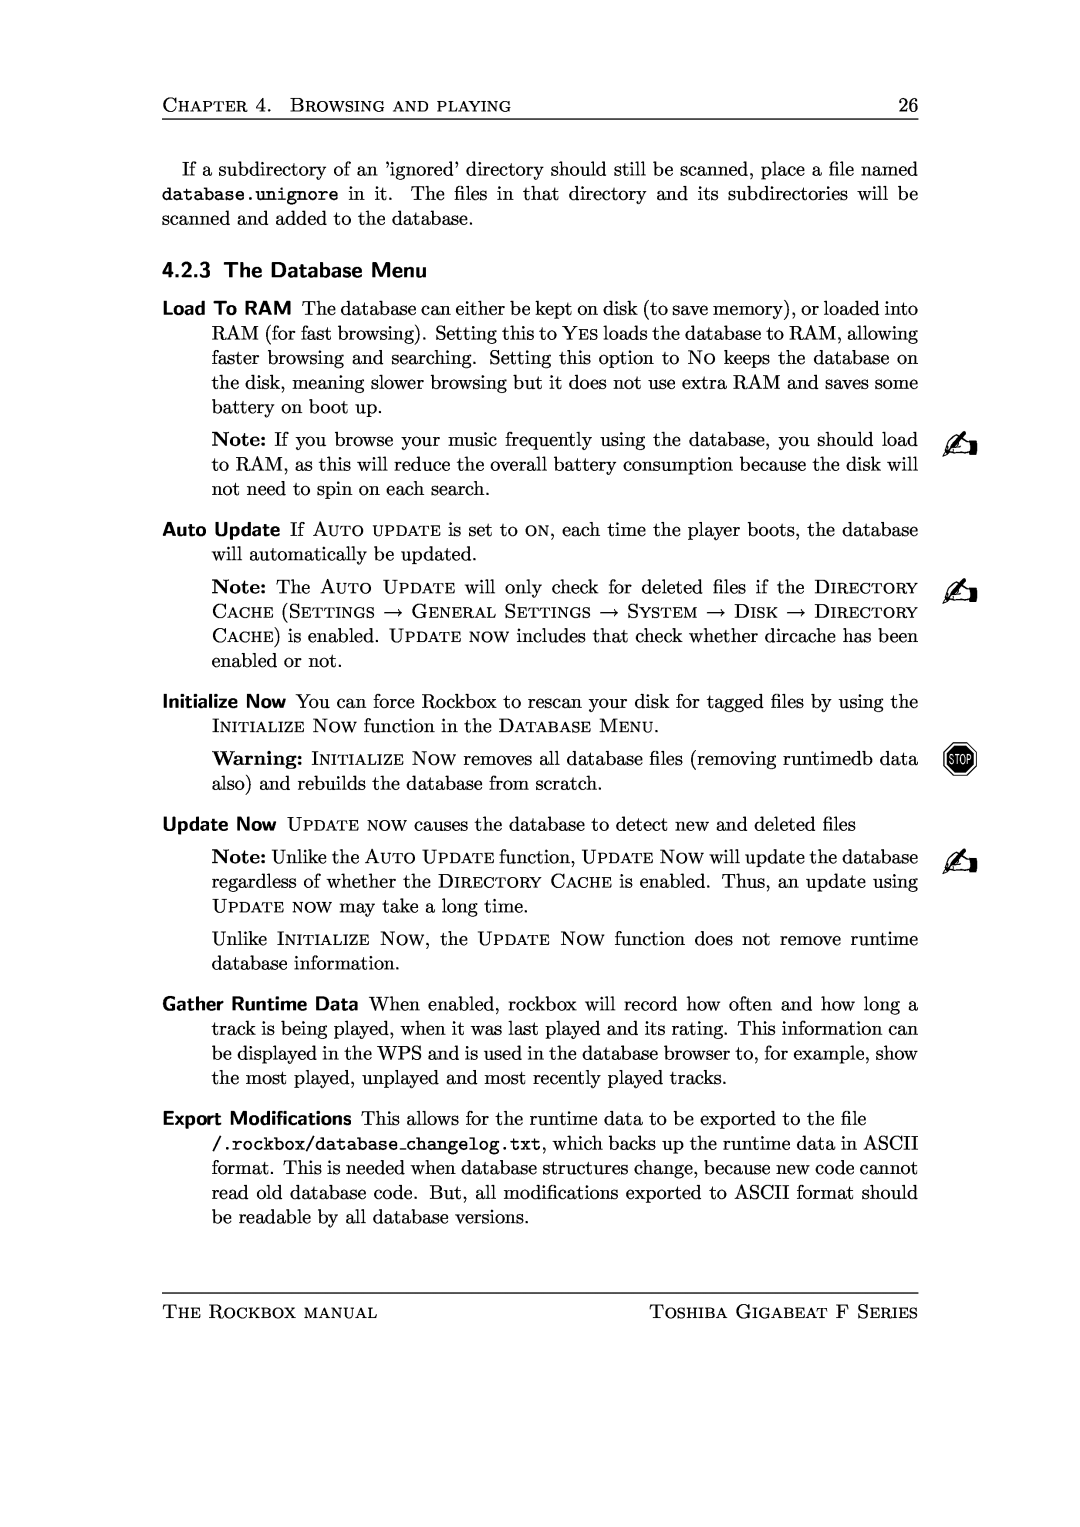 Toshiba F Series manual The Database Menu 